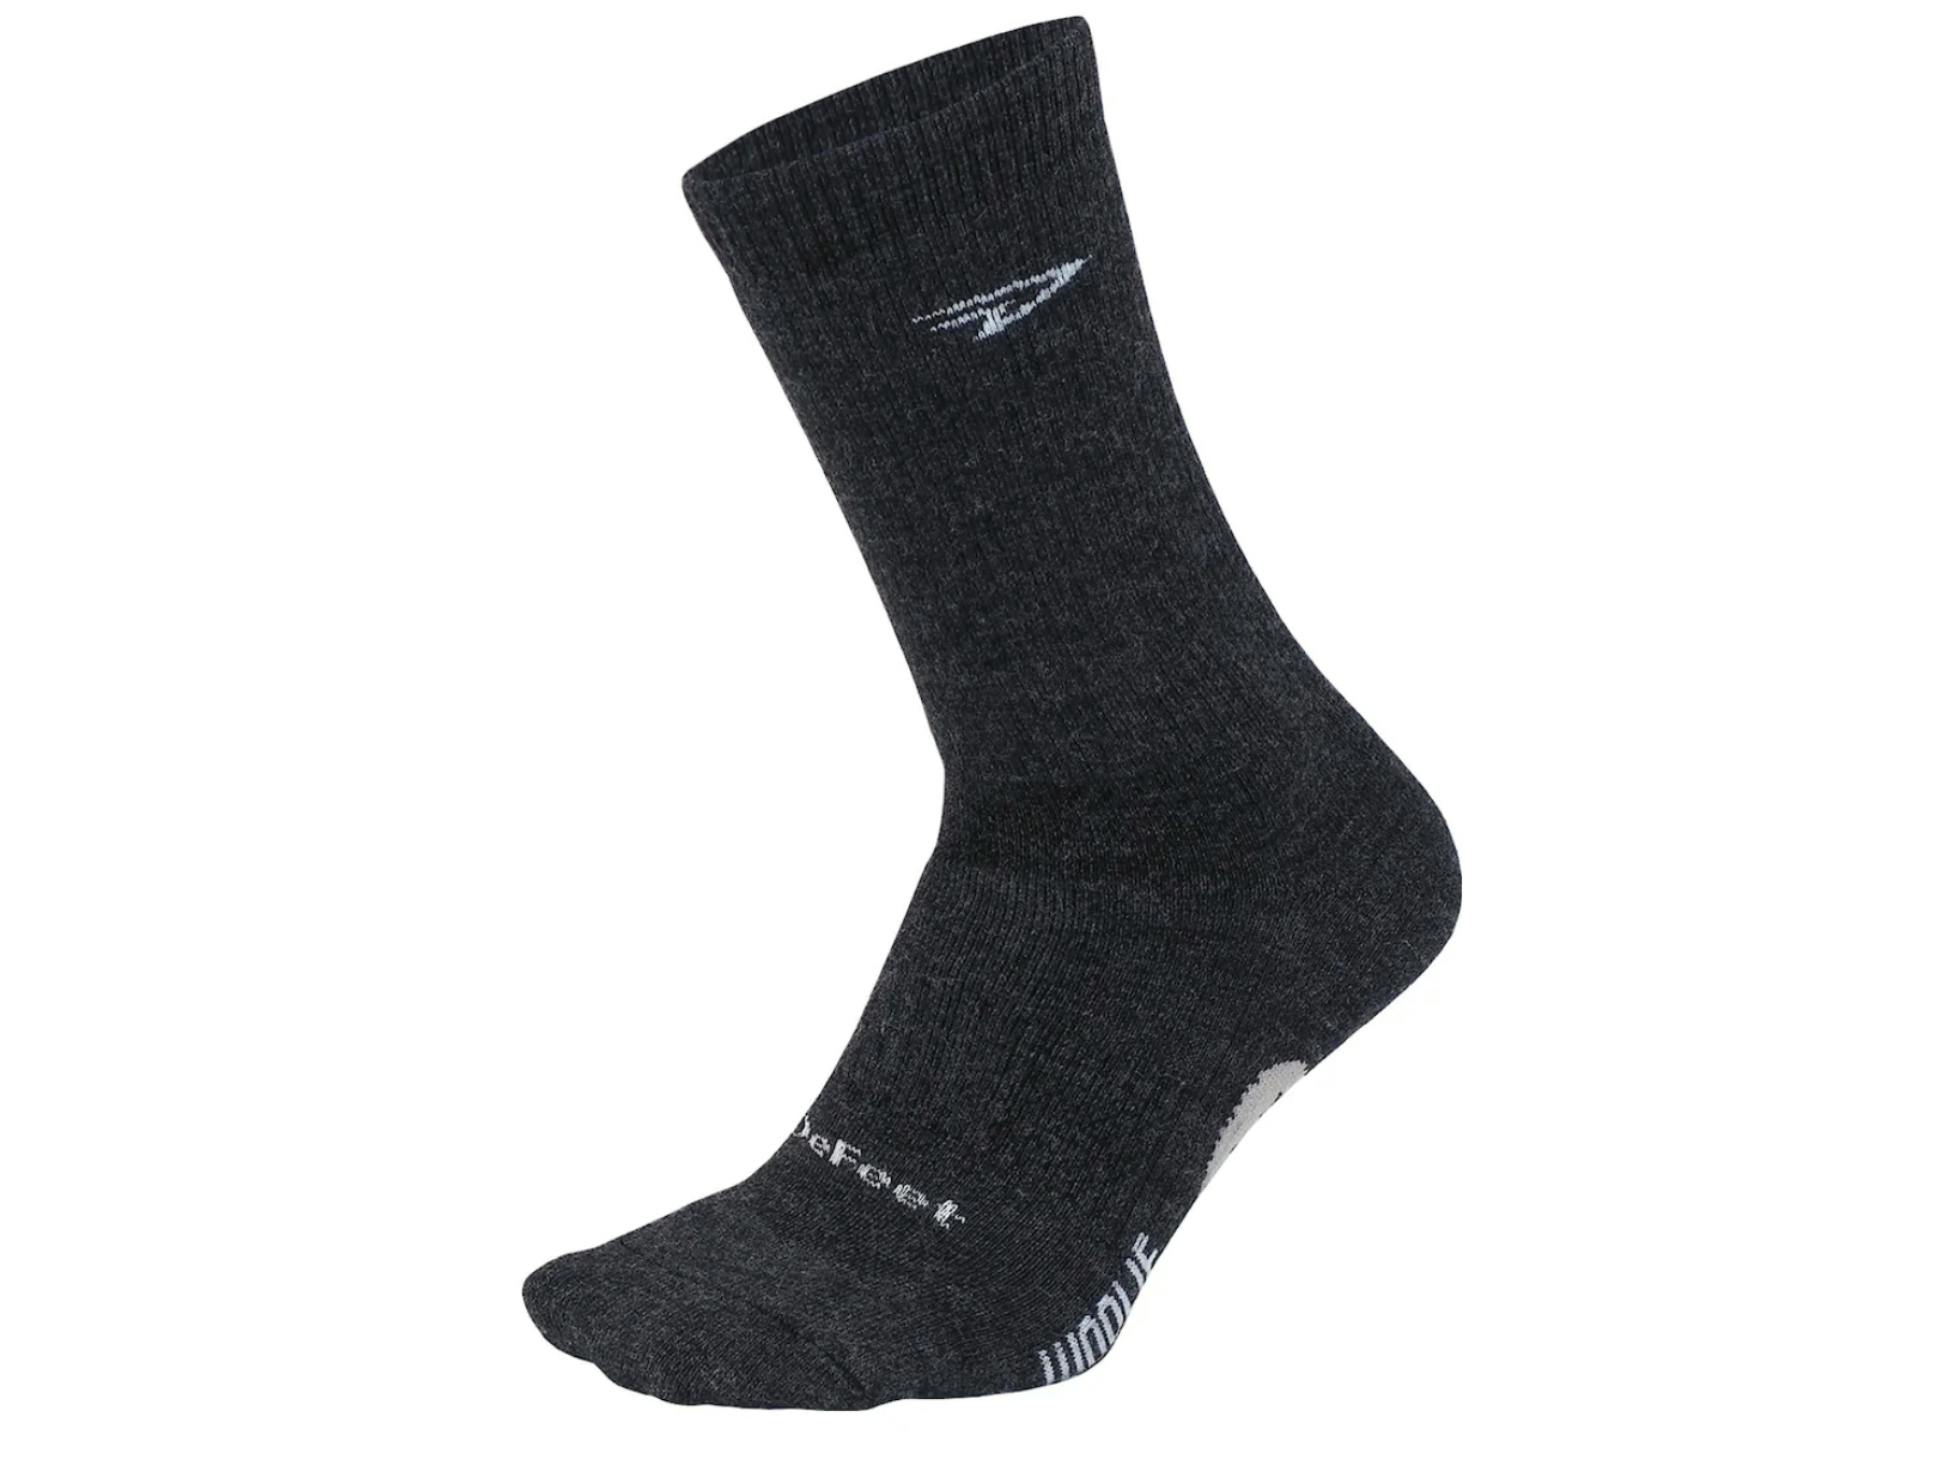 Product image of Defeet’s Woolie Bolie 2 socks.